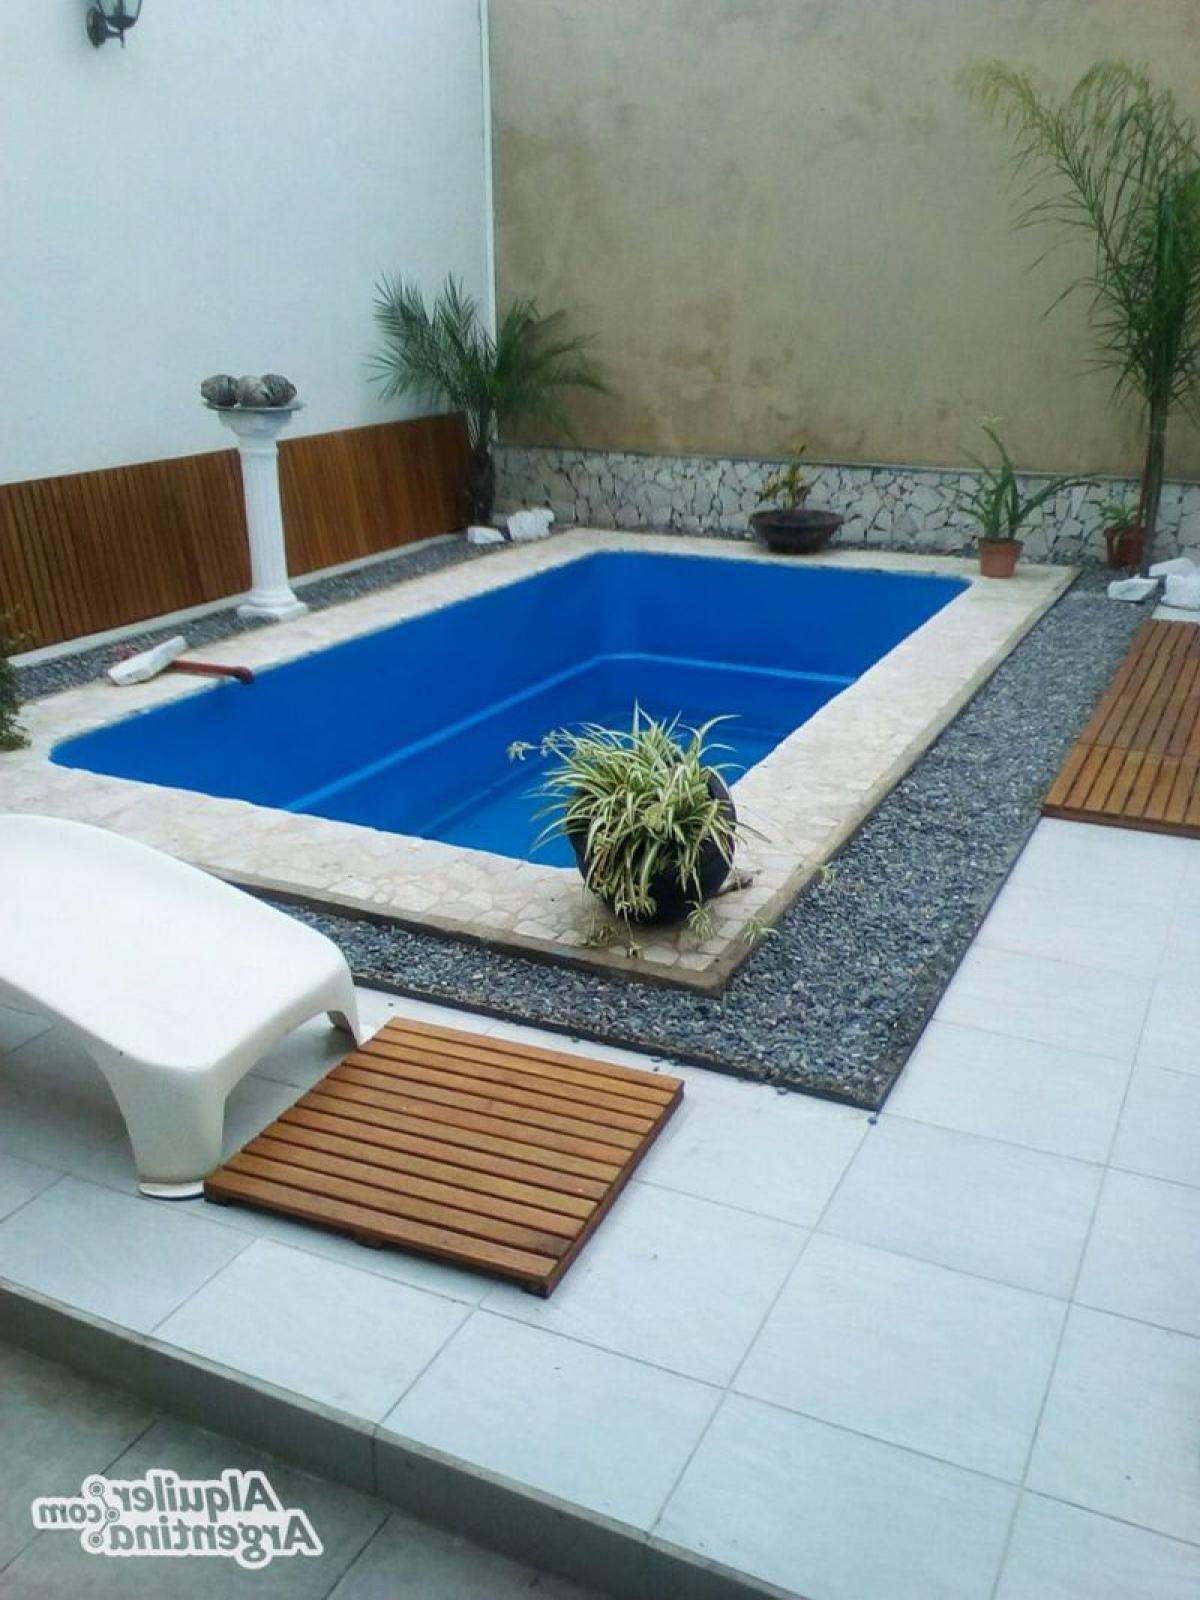 Picture of Apartment For Sale in Santiago Del Estero, Santiago del Estero, Argentina